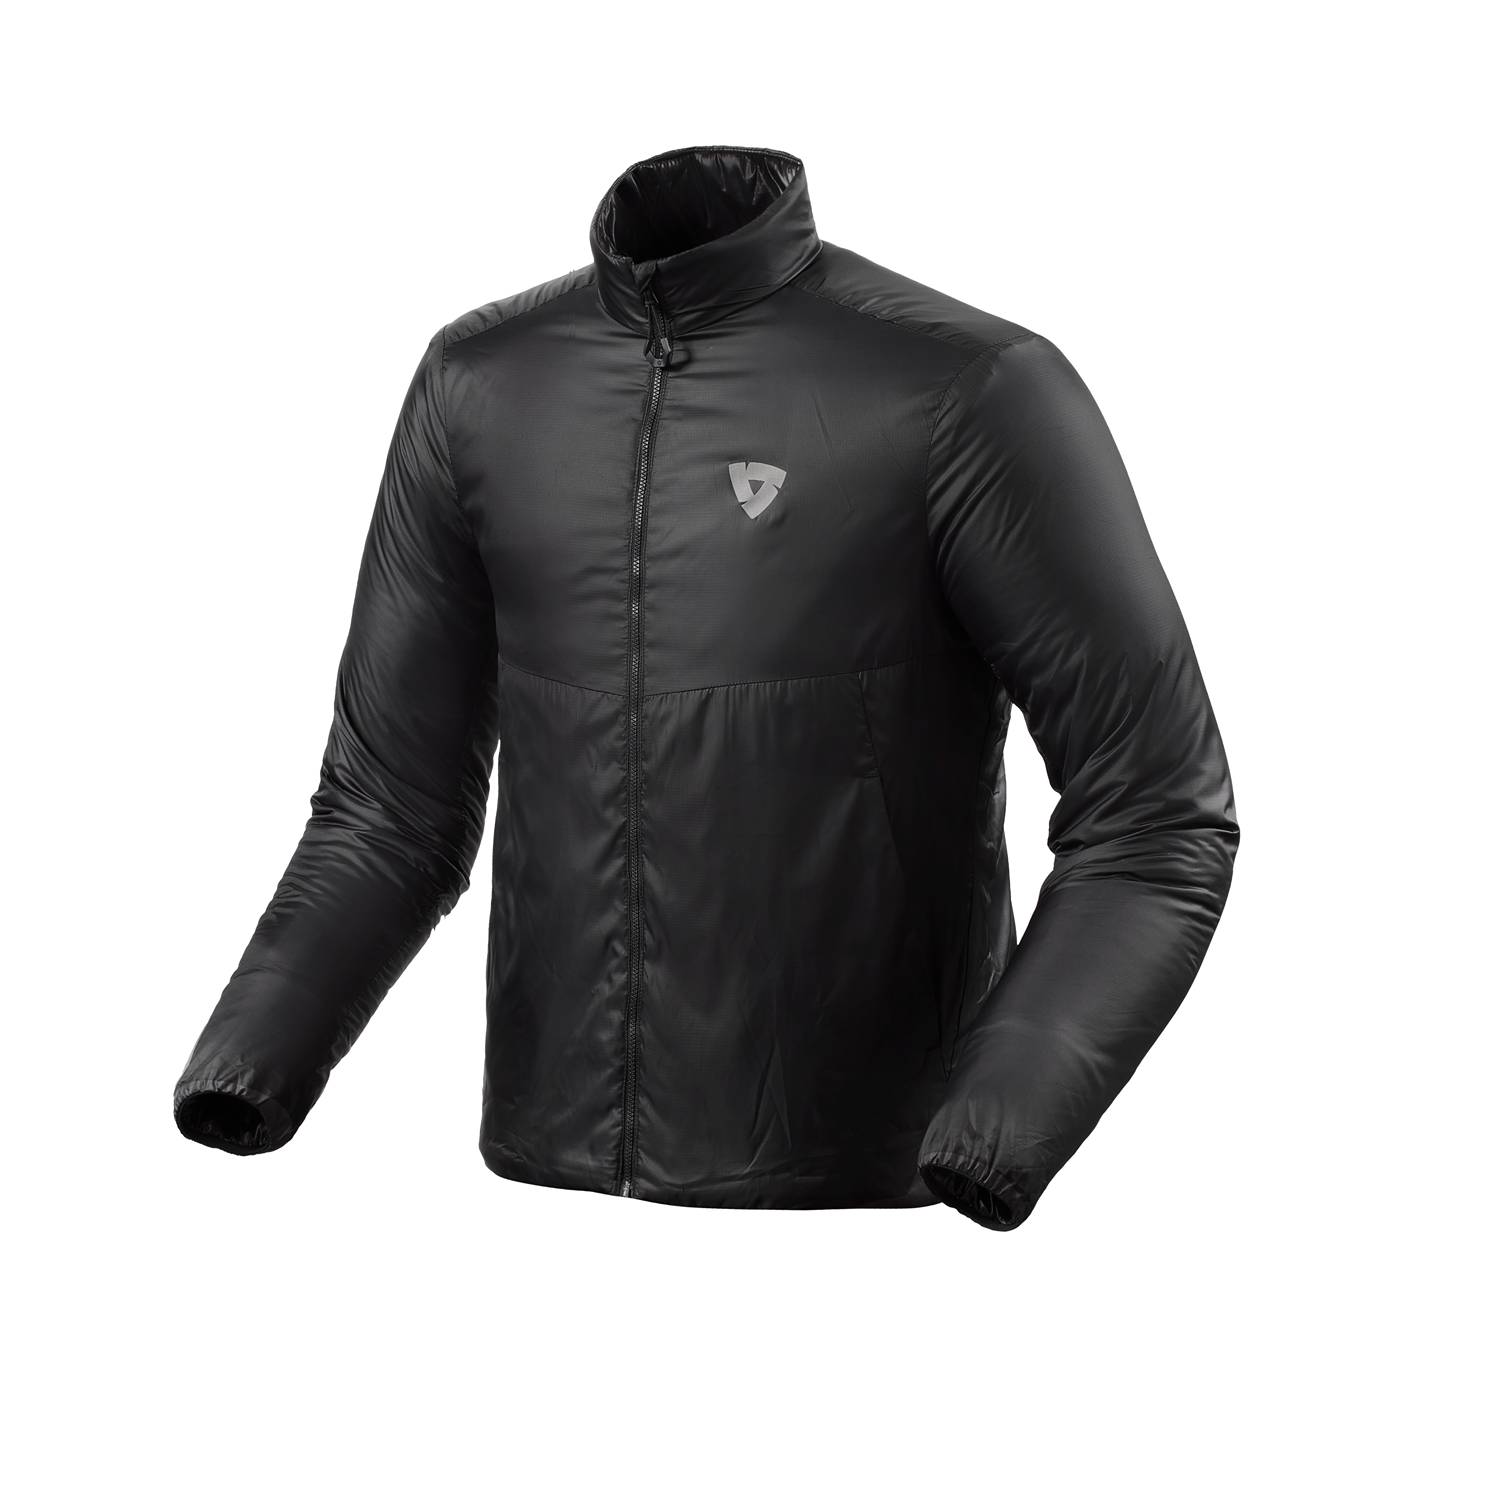 Image of REV'IT! Core 2 Mid Layer Jacket Black Talla M